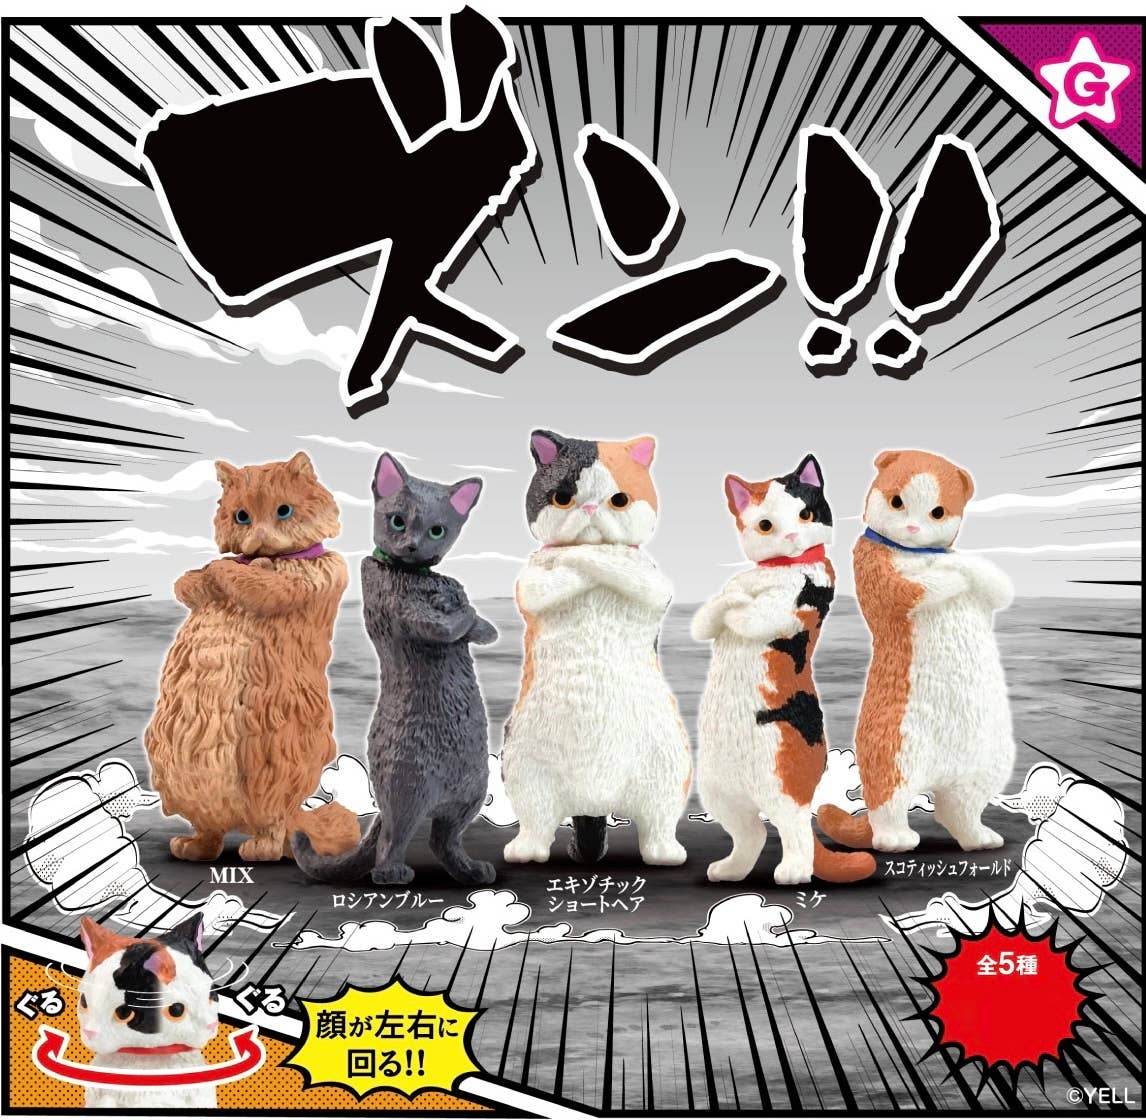 BCmini Yell World Zun! Cats Figurine Capsule Kawaii Gifts 034466702529